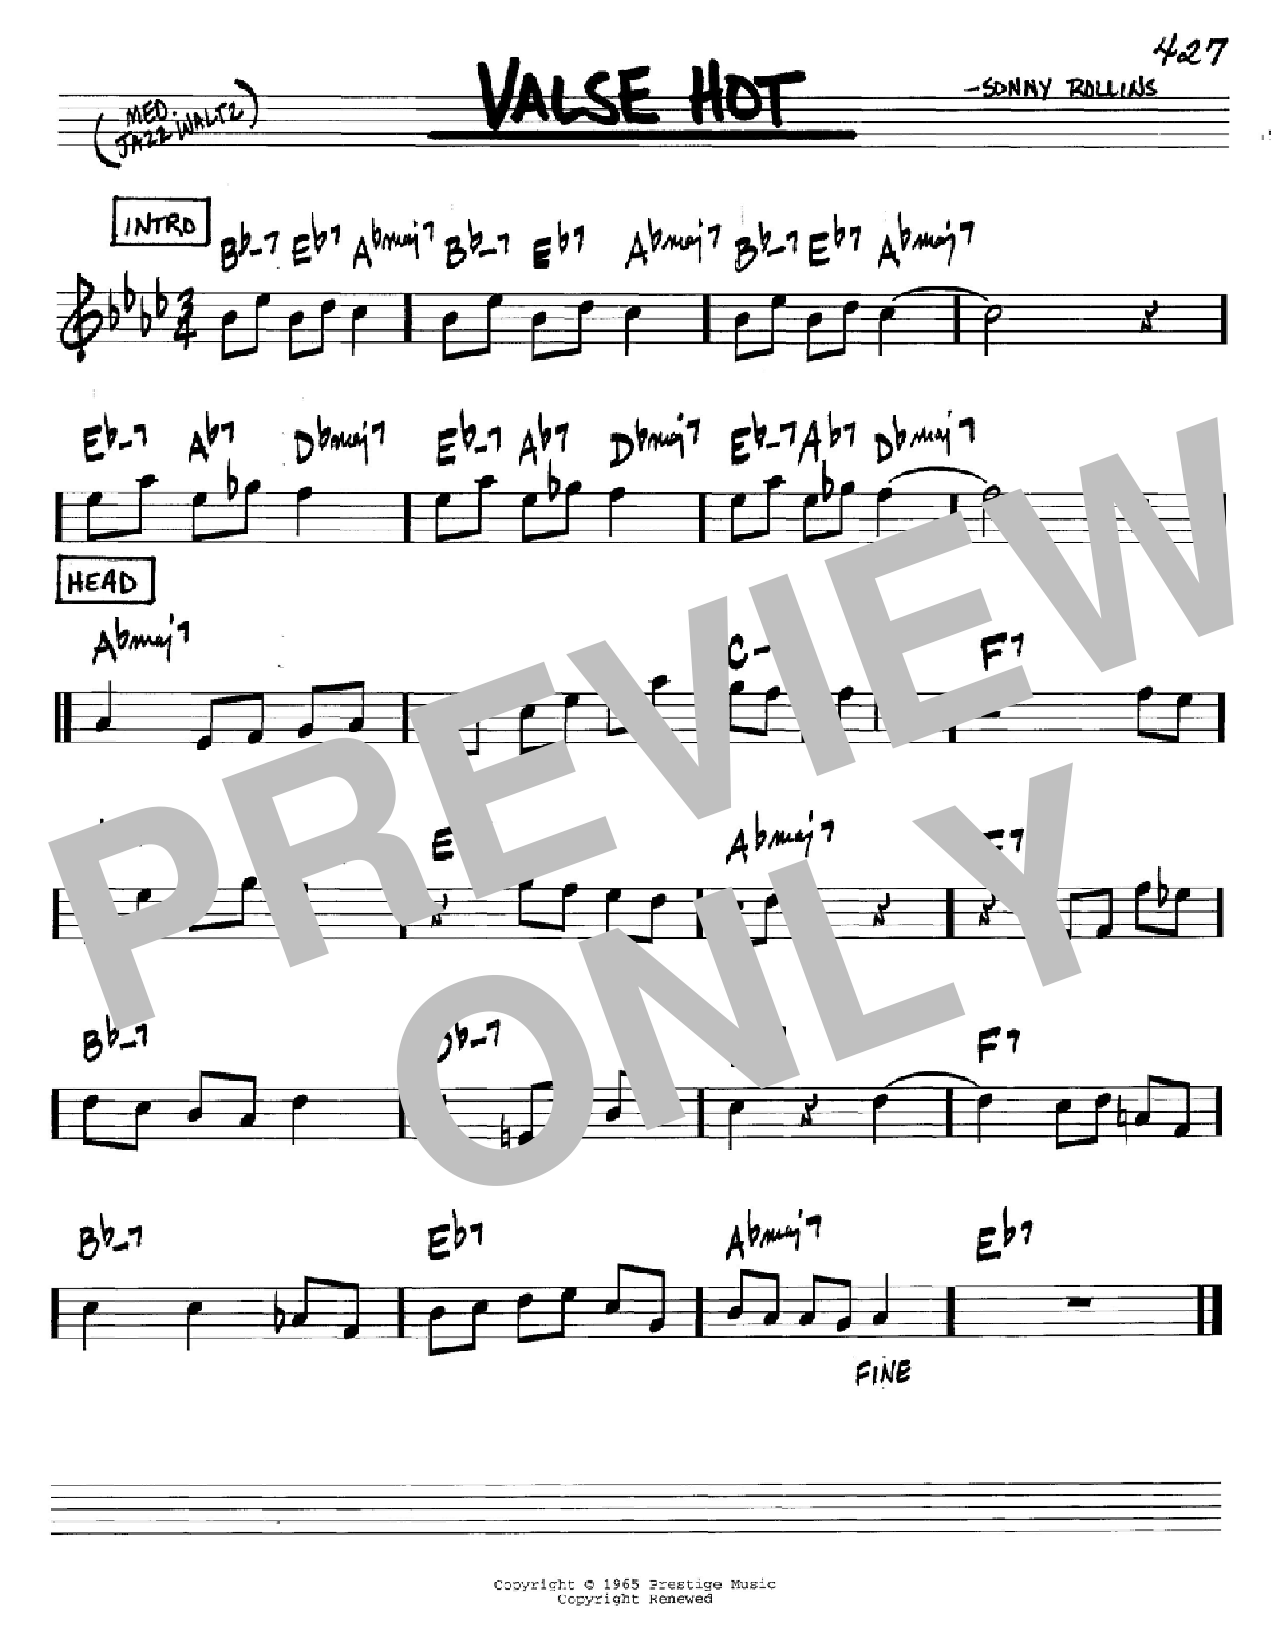 Sonny Rollins Valse Hot Sheet Music Notes & Chords for Tenor Sax Transcription - Download or Print PDF